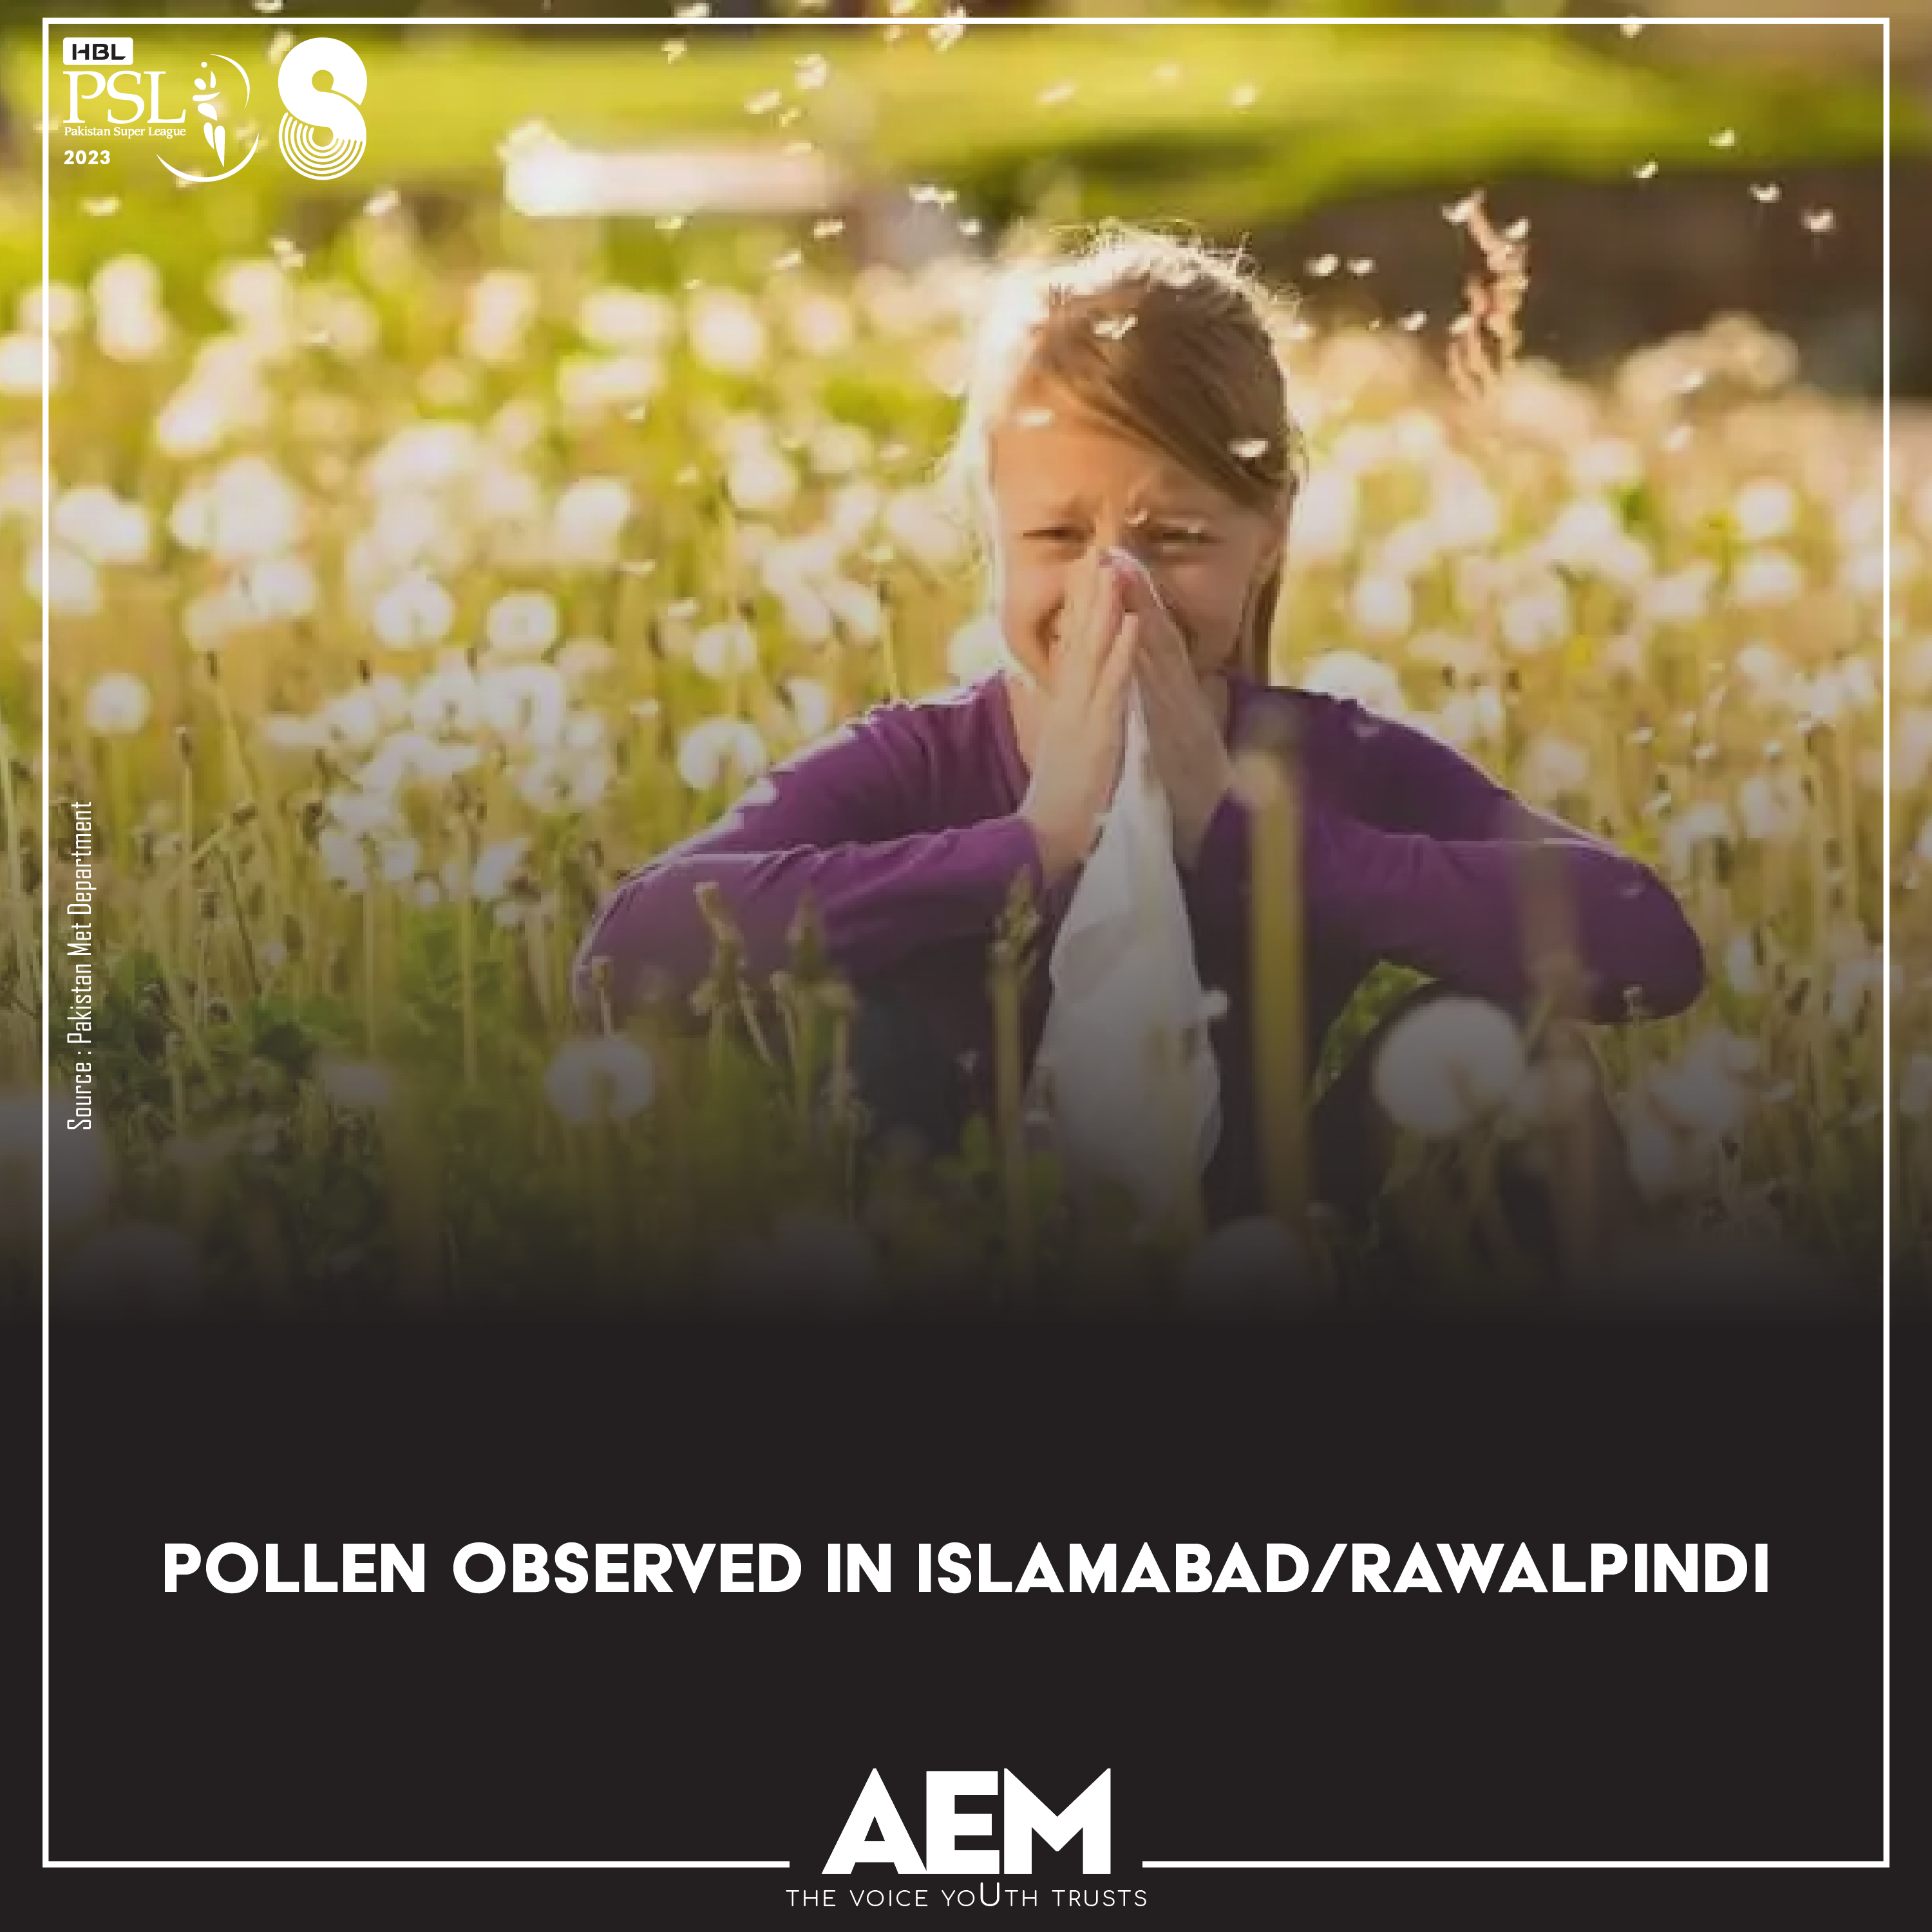 Pollen observed in Islamabad/Rawalpindi